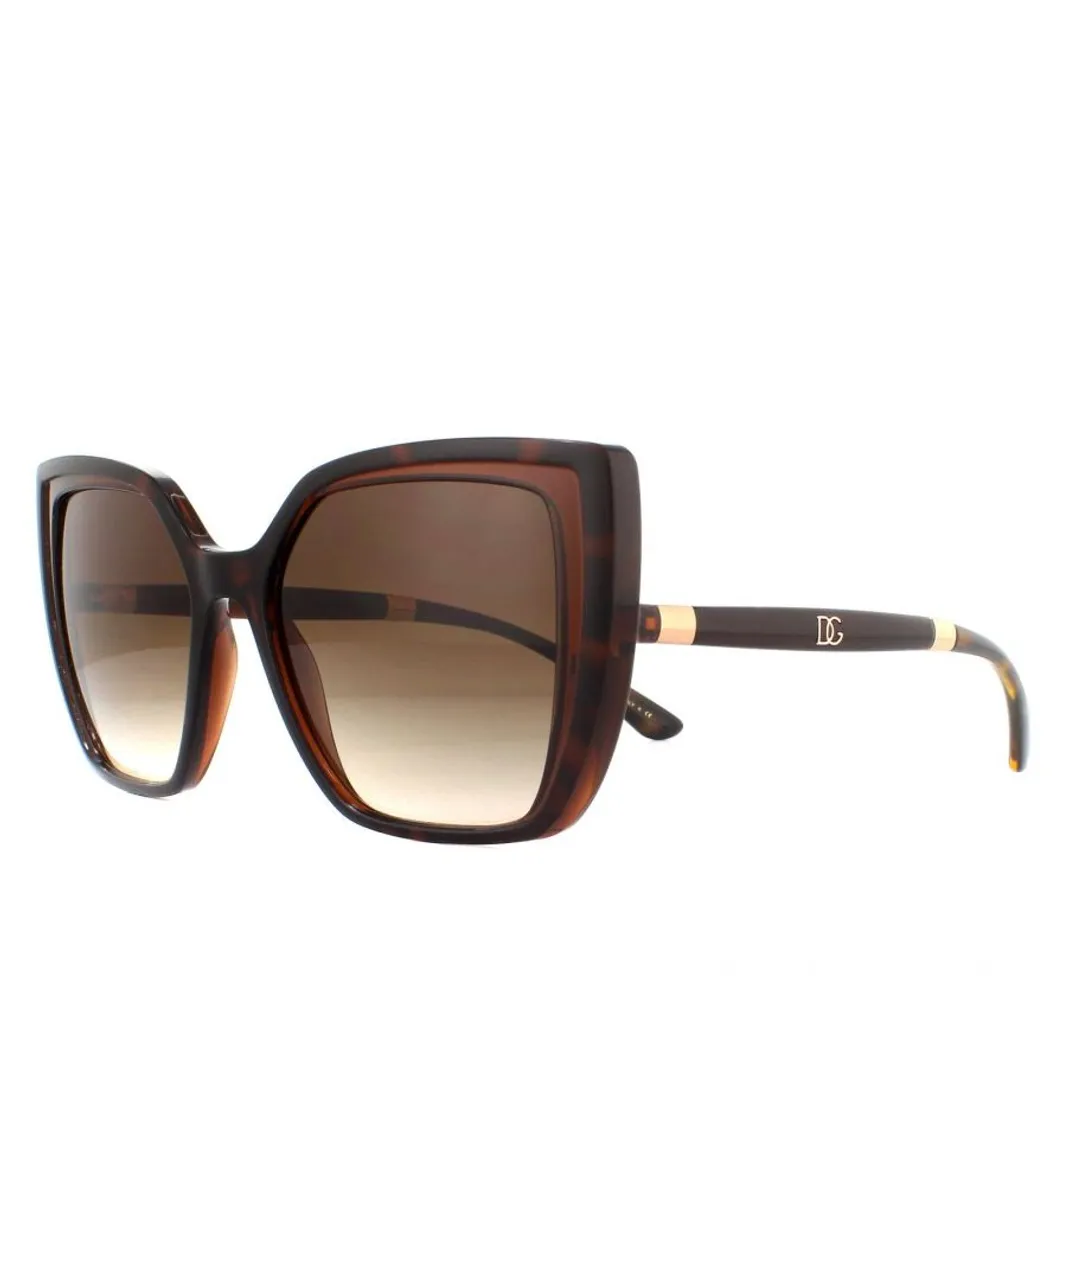 Dolce & Gabbana Womens Sunglasses DG6138 318513 Havana On Transparent Brown Gradient - One